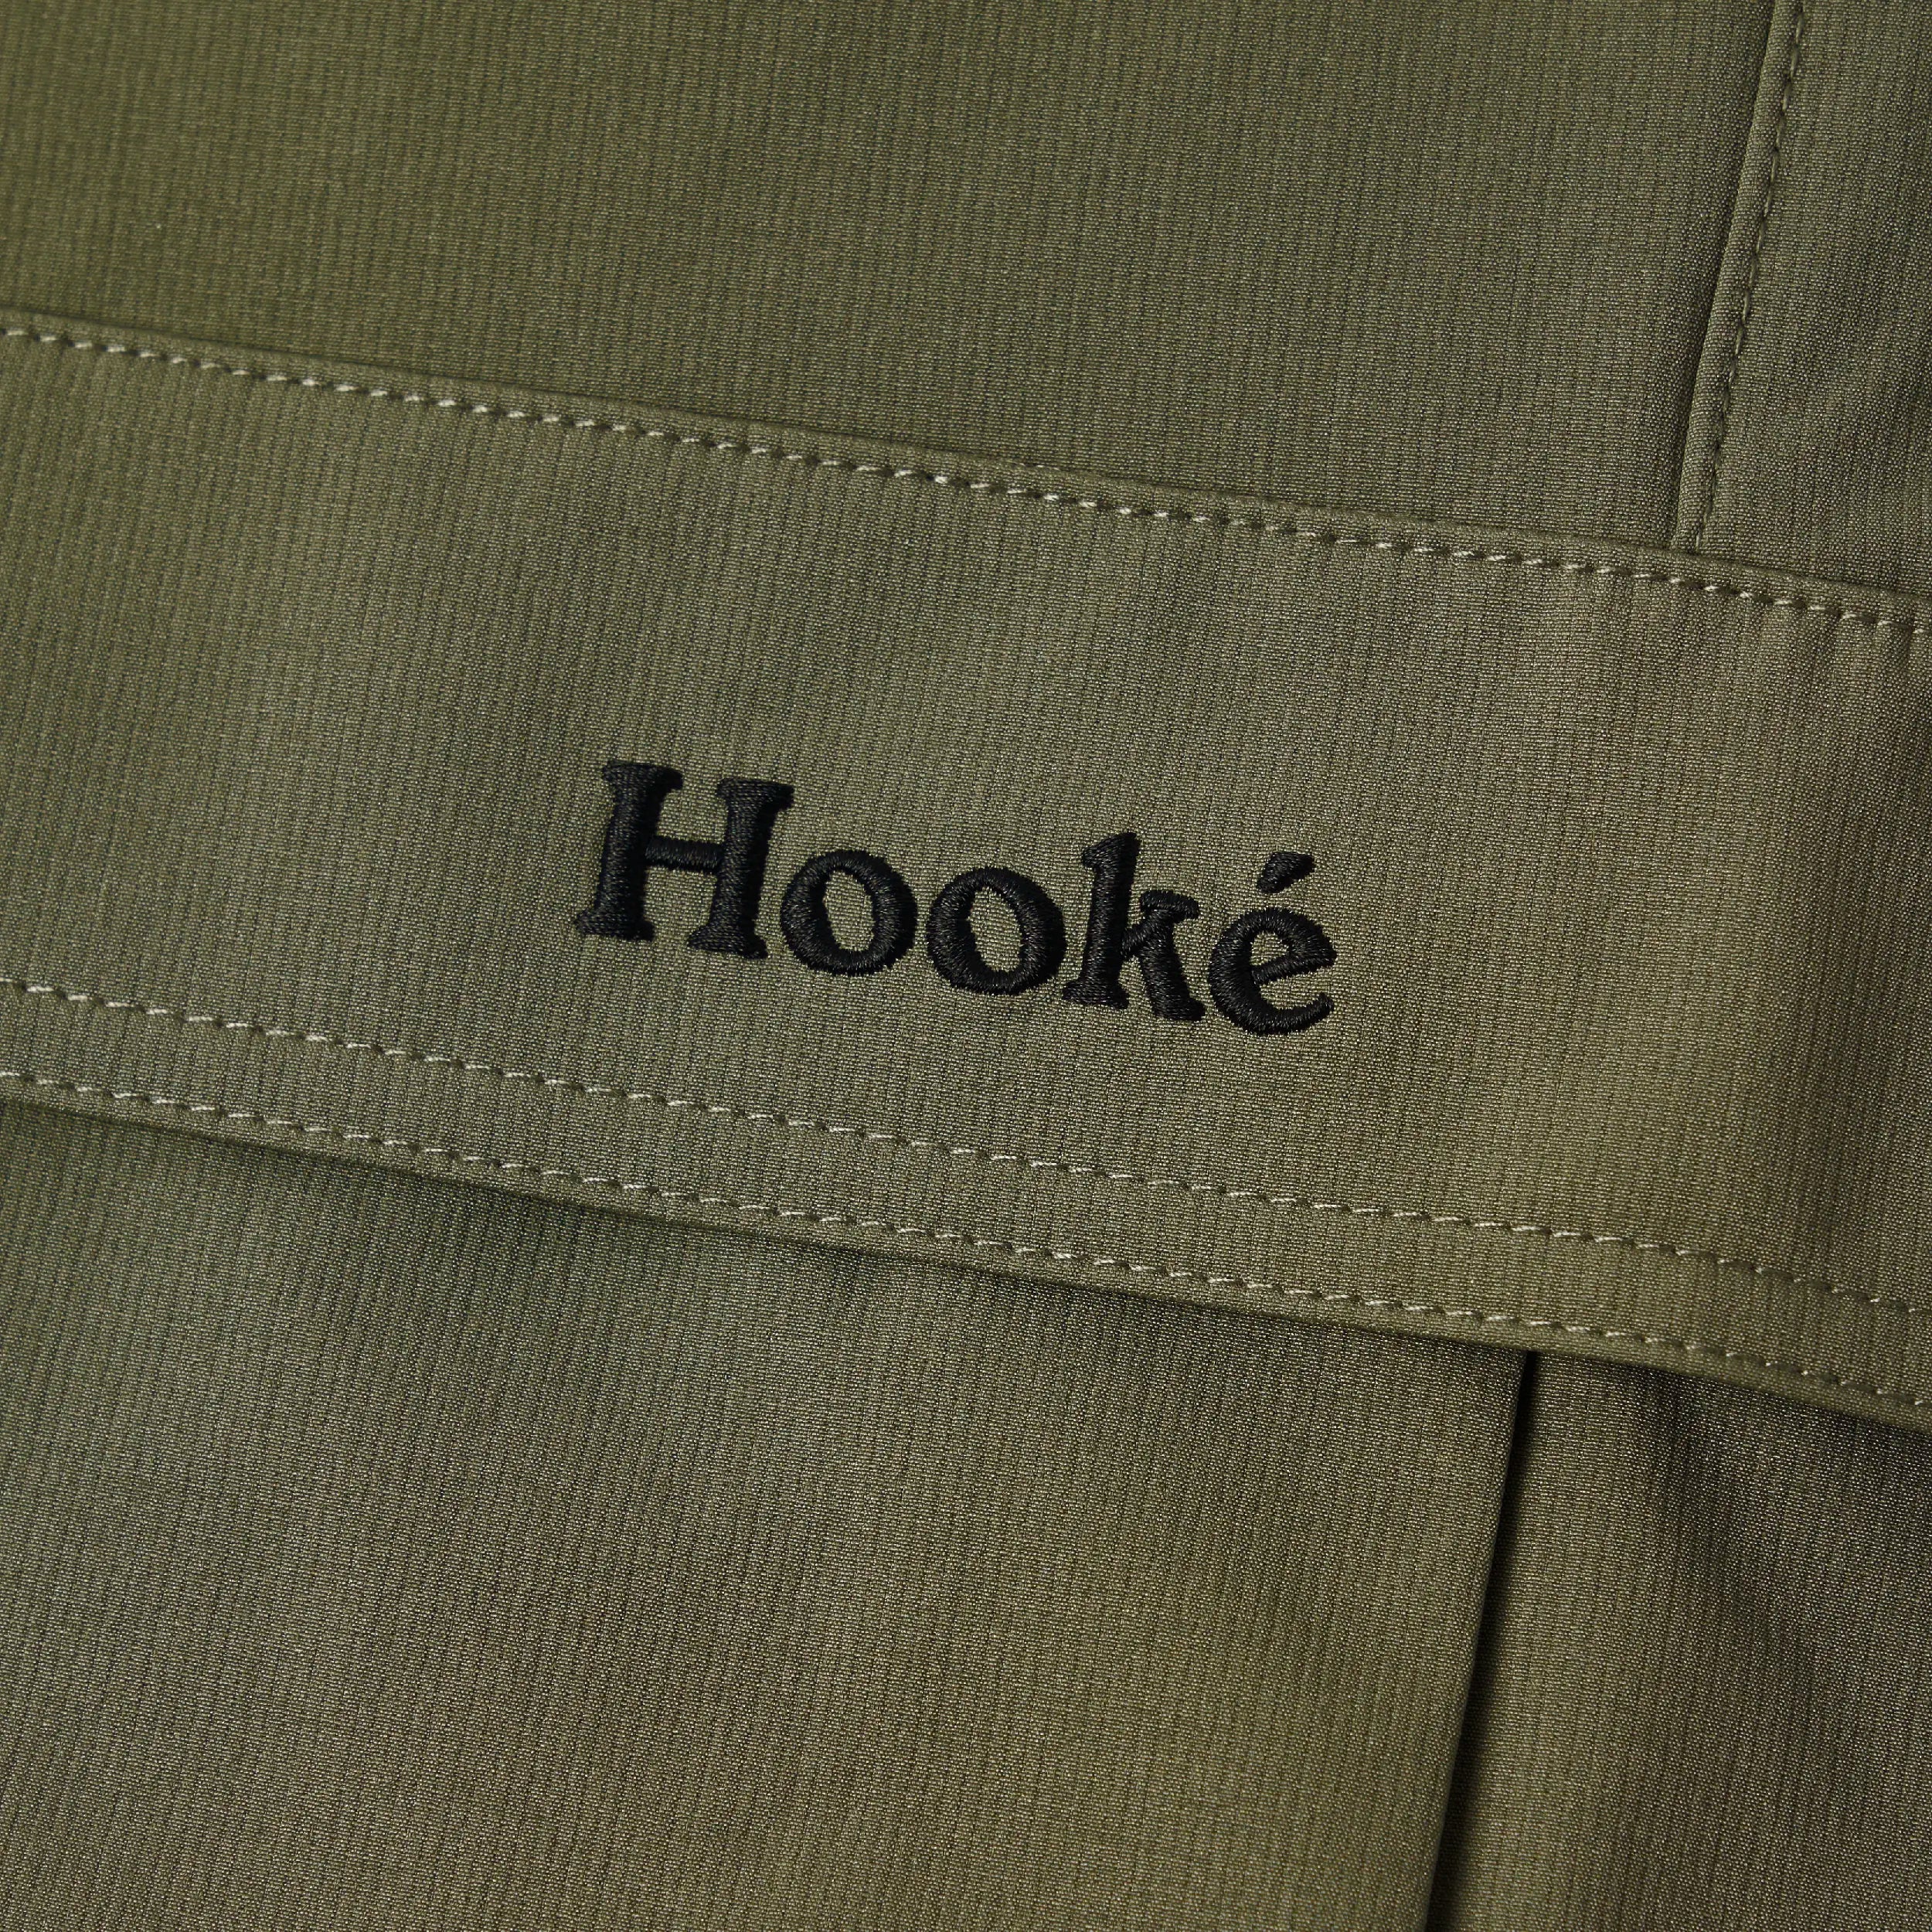 M's Expedition Shorts - Hooké